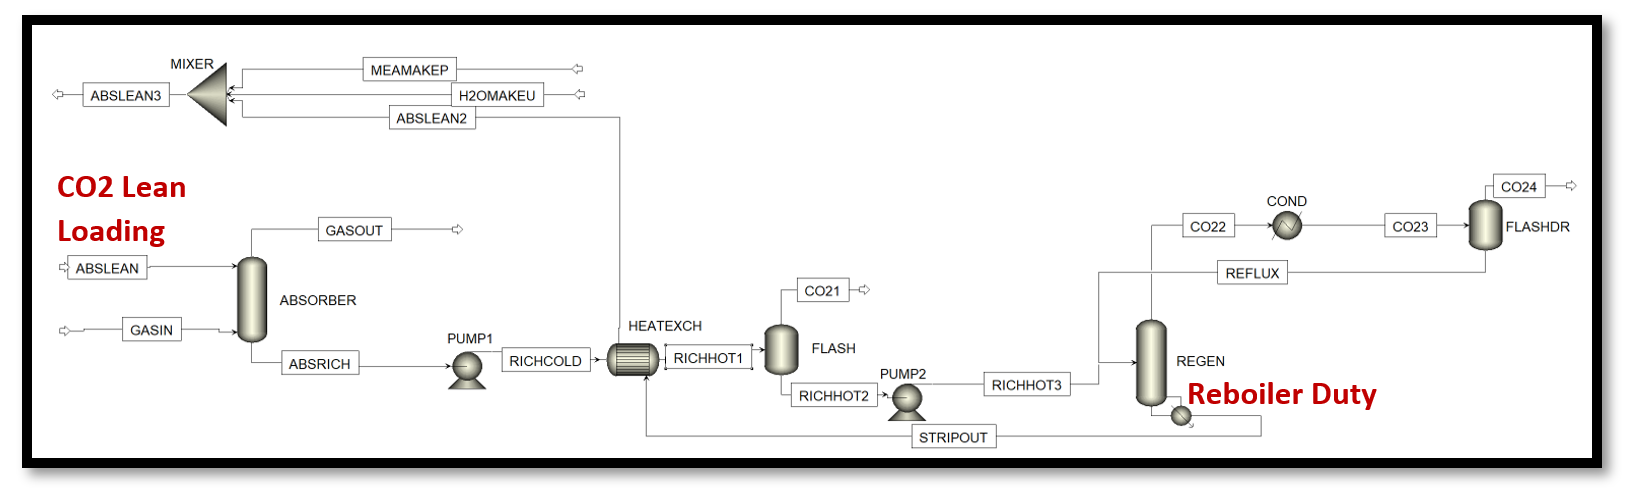 Figure 14: MEA Carbon Capture System